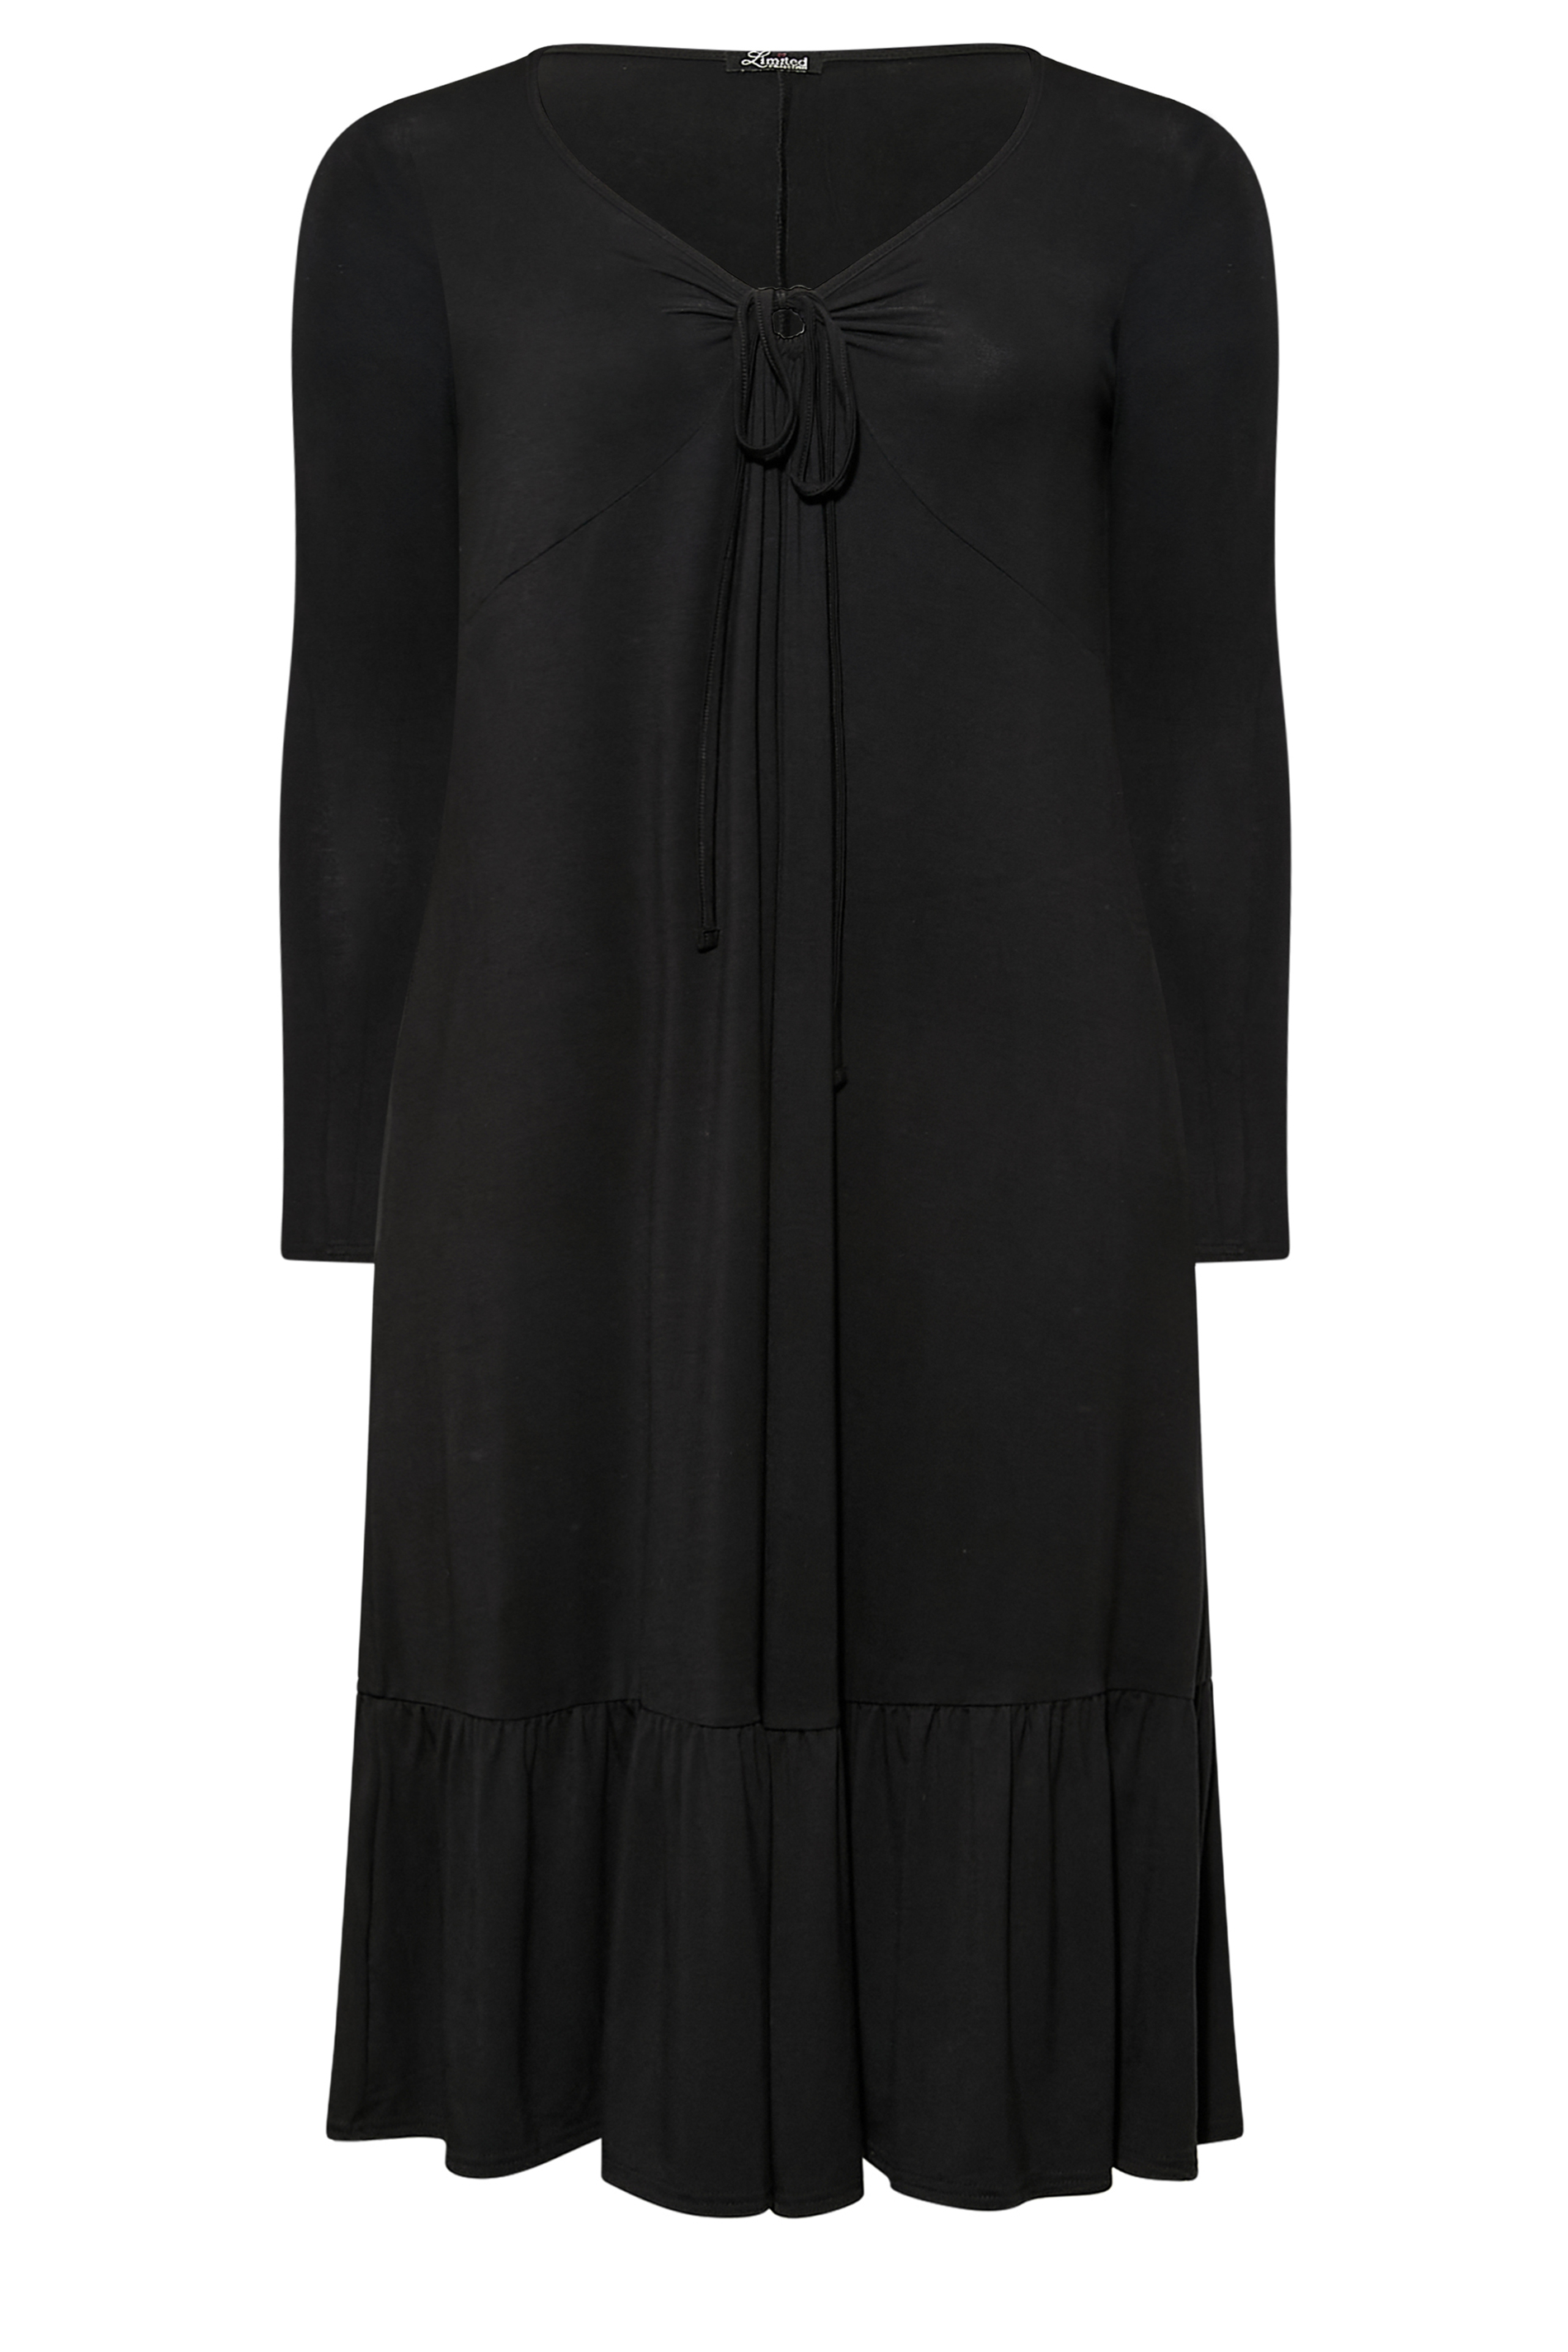 LIMITED COLLECTION Plus Size Black Keyhole Tie Neck Midaxi Dress ...